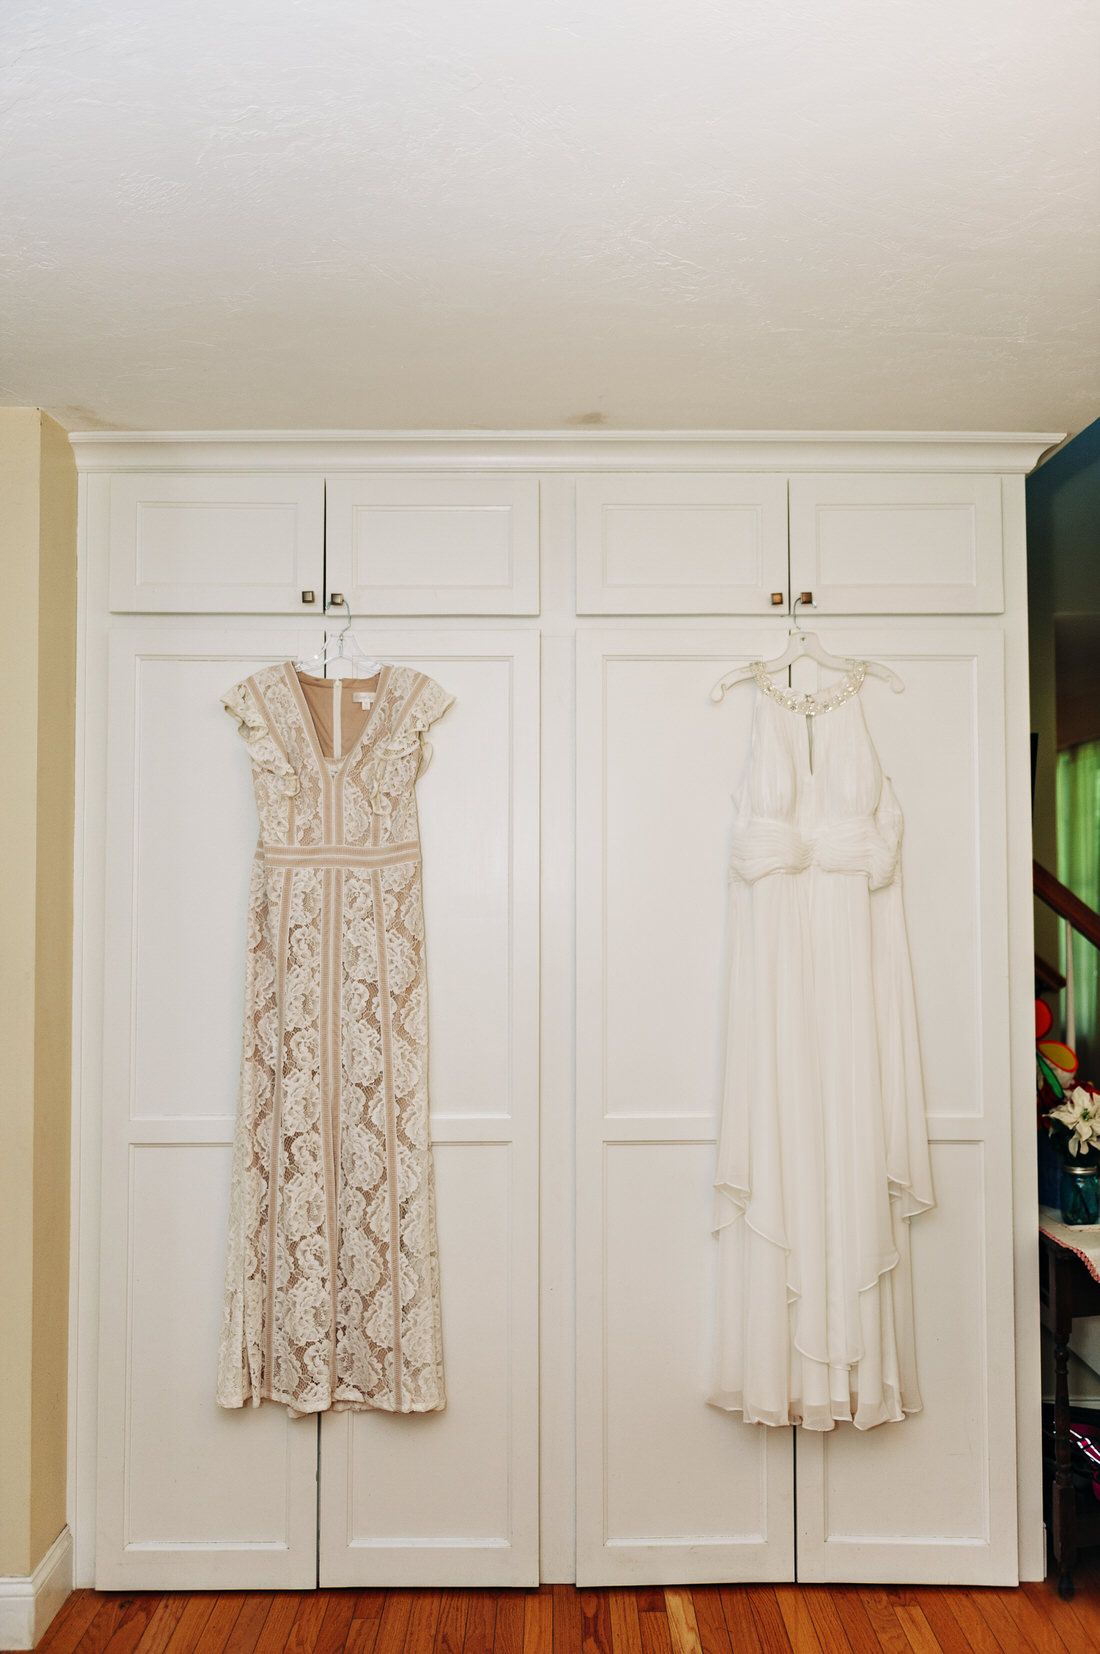 Brides dresses hanging